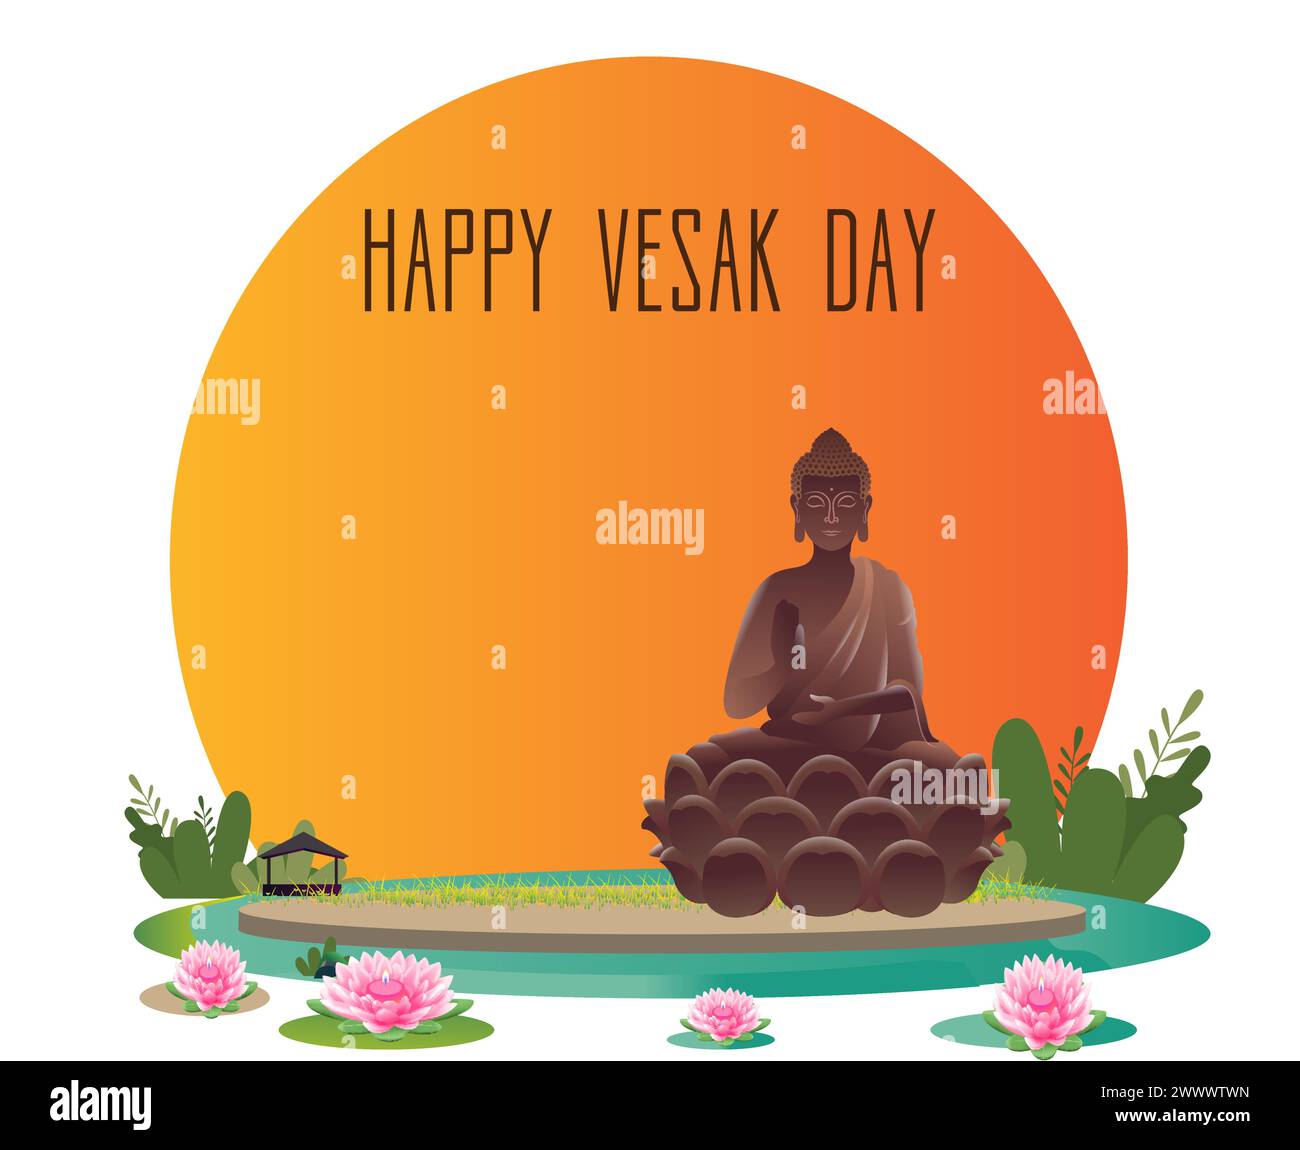 Joyeux Vesak Budha Purnima Day fond avec Budha Statue illustration vectorielle Illustration de Vecteur